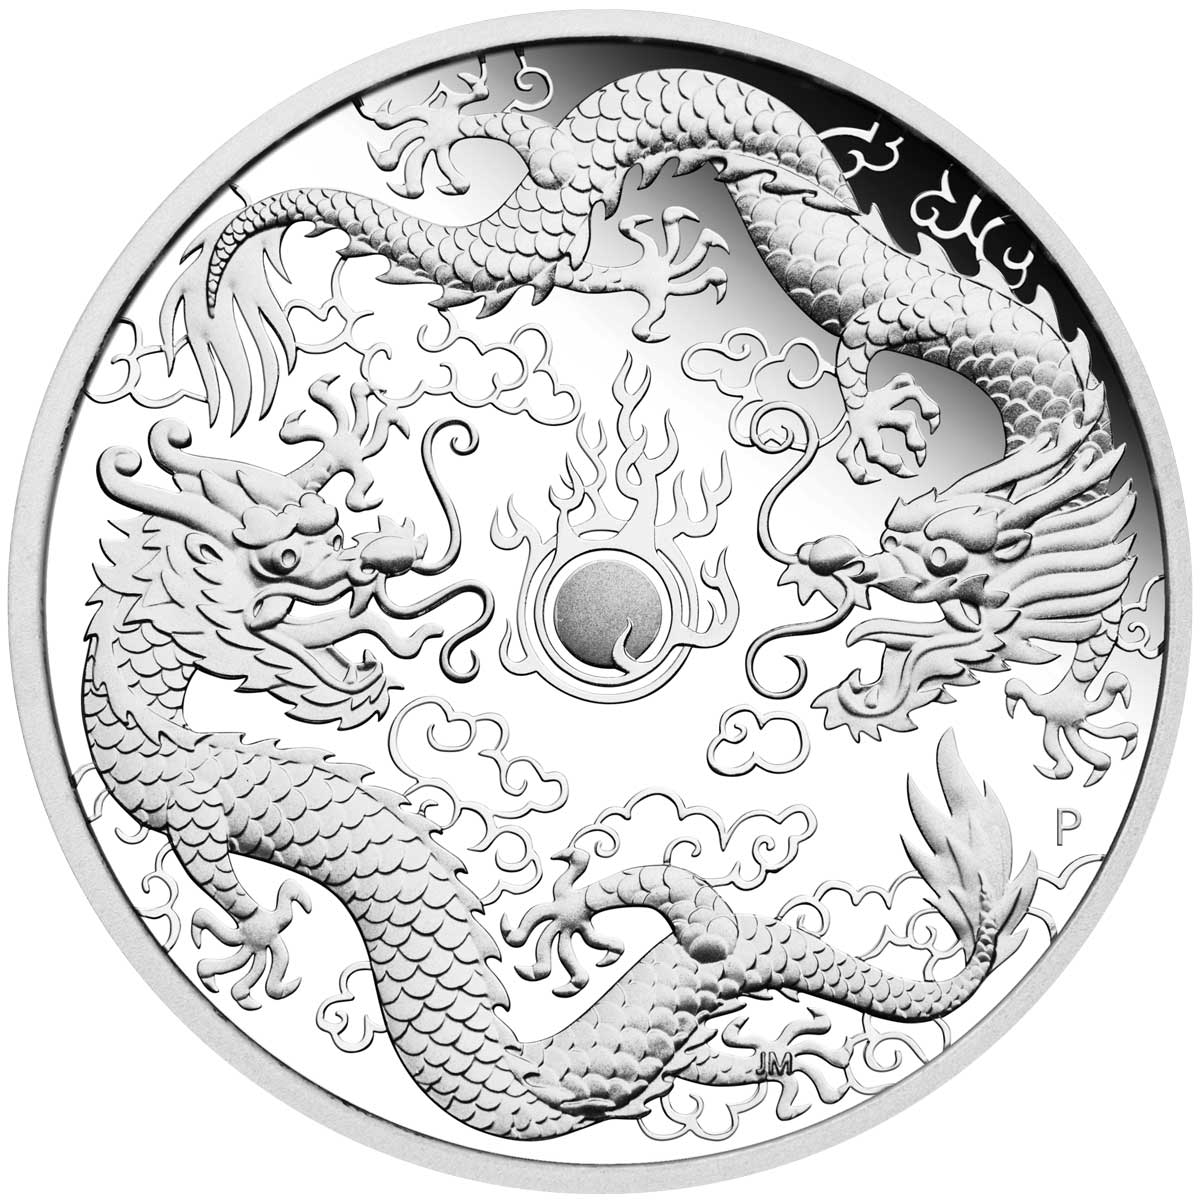 1 oz $1 AUD Australian Silver Double Dragon Coin BU (In Capsule) | European Mint